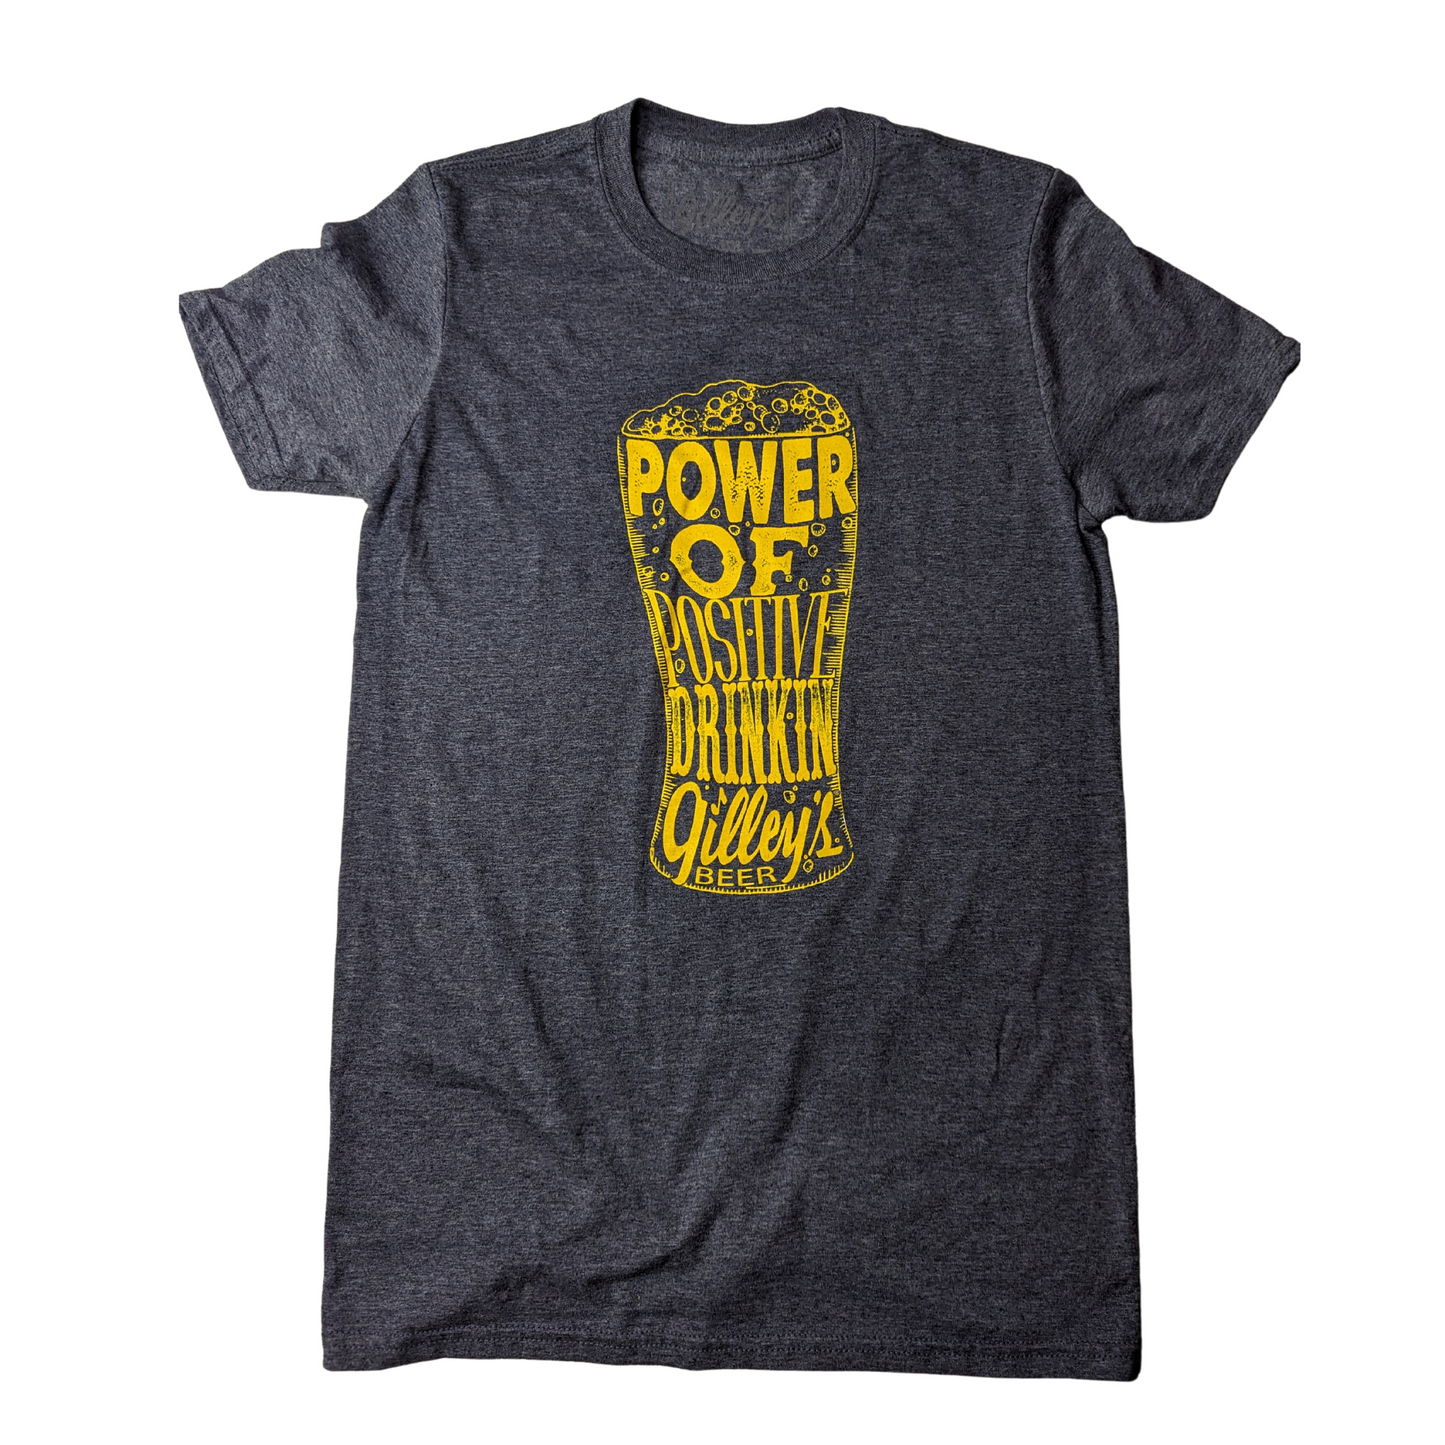 Gilley's Beer Shirt - Power of Positive Drinkin' shirt 